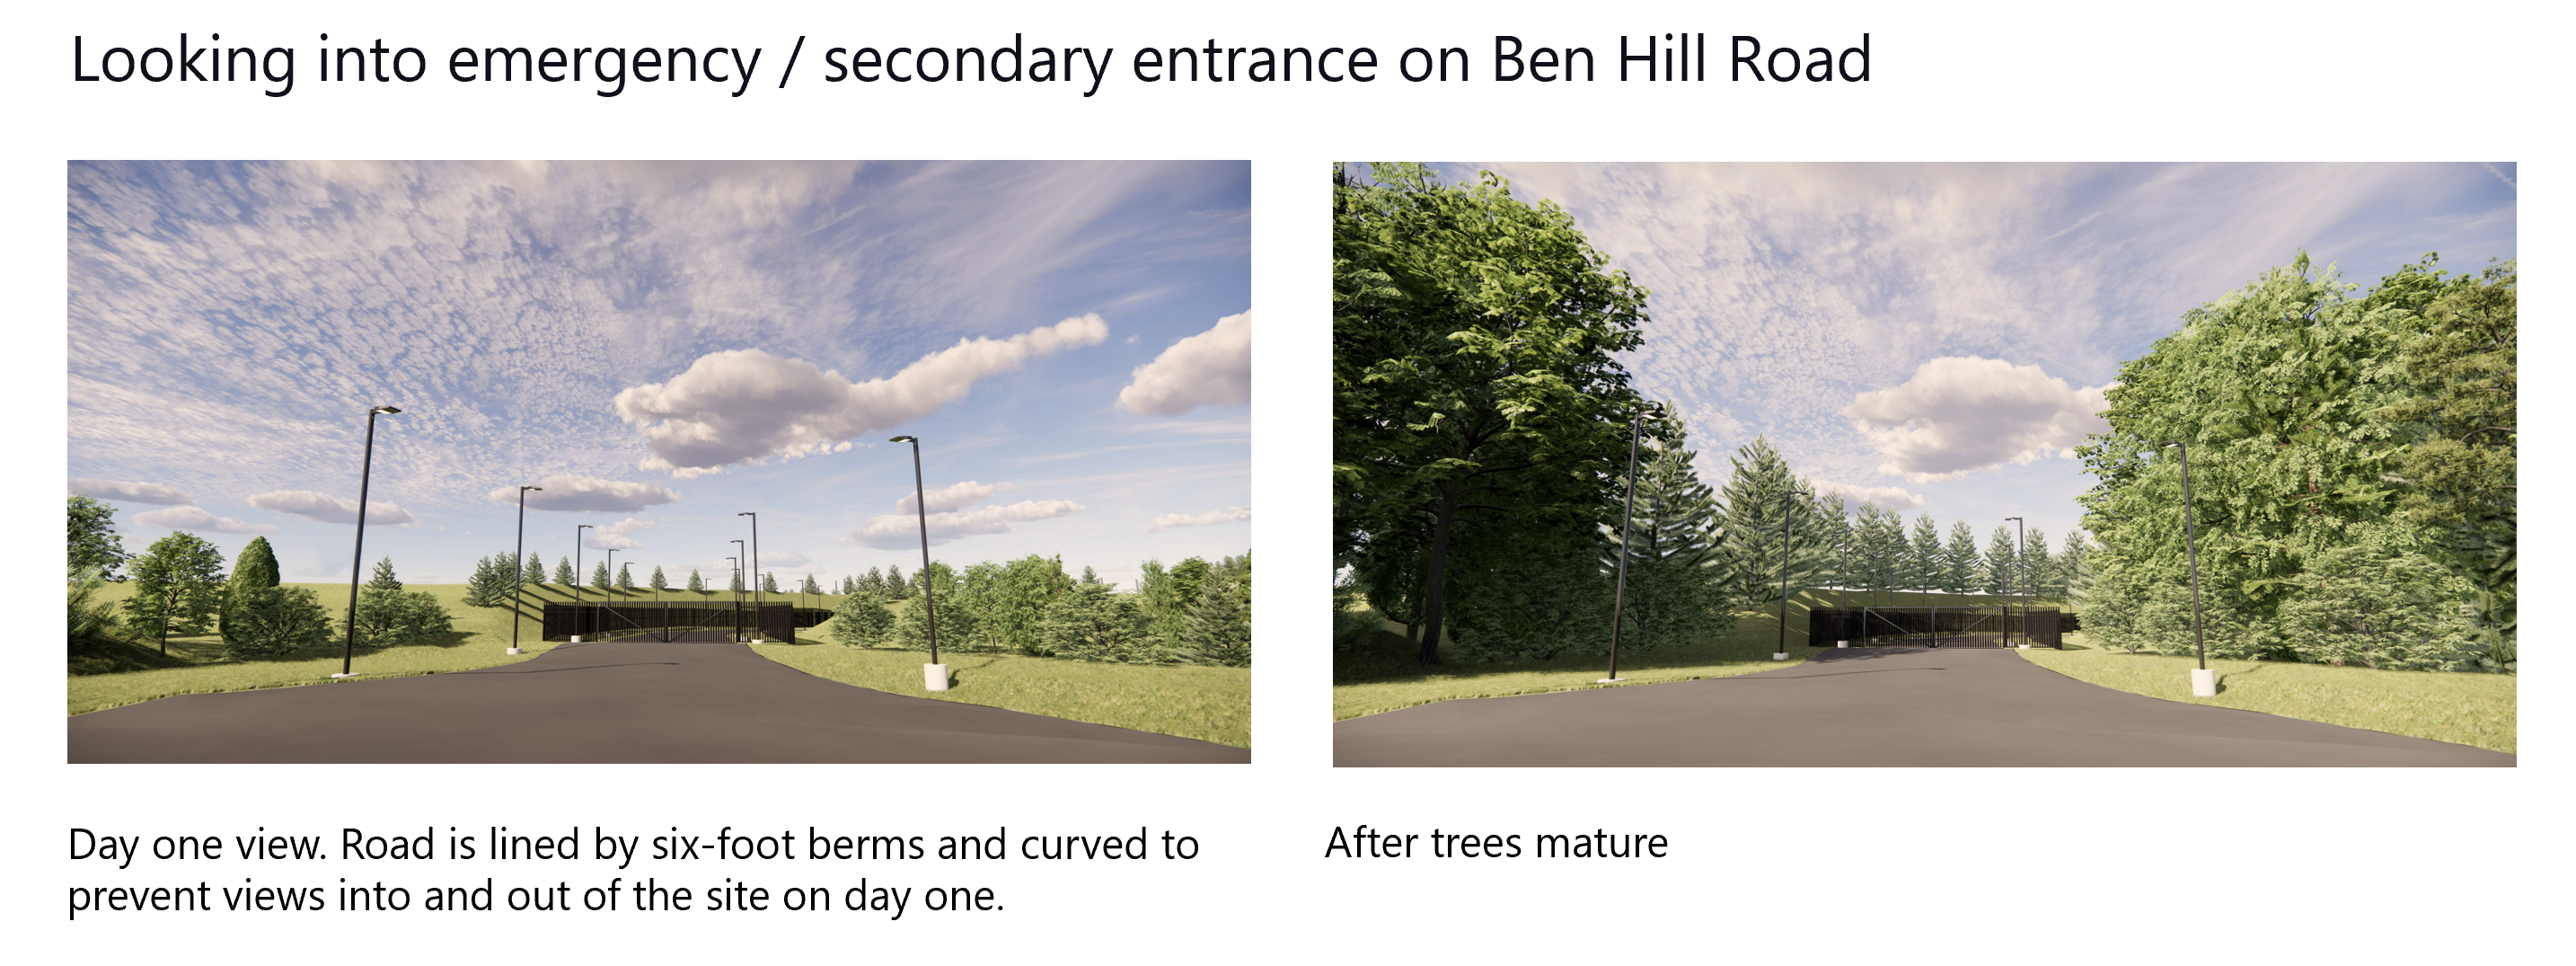 Melihat pintu masuk kecemasan di Ben Hill Road